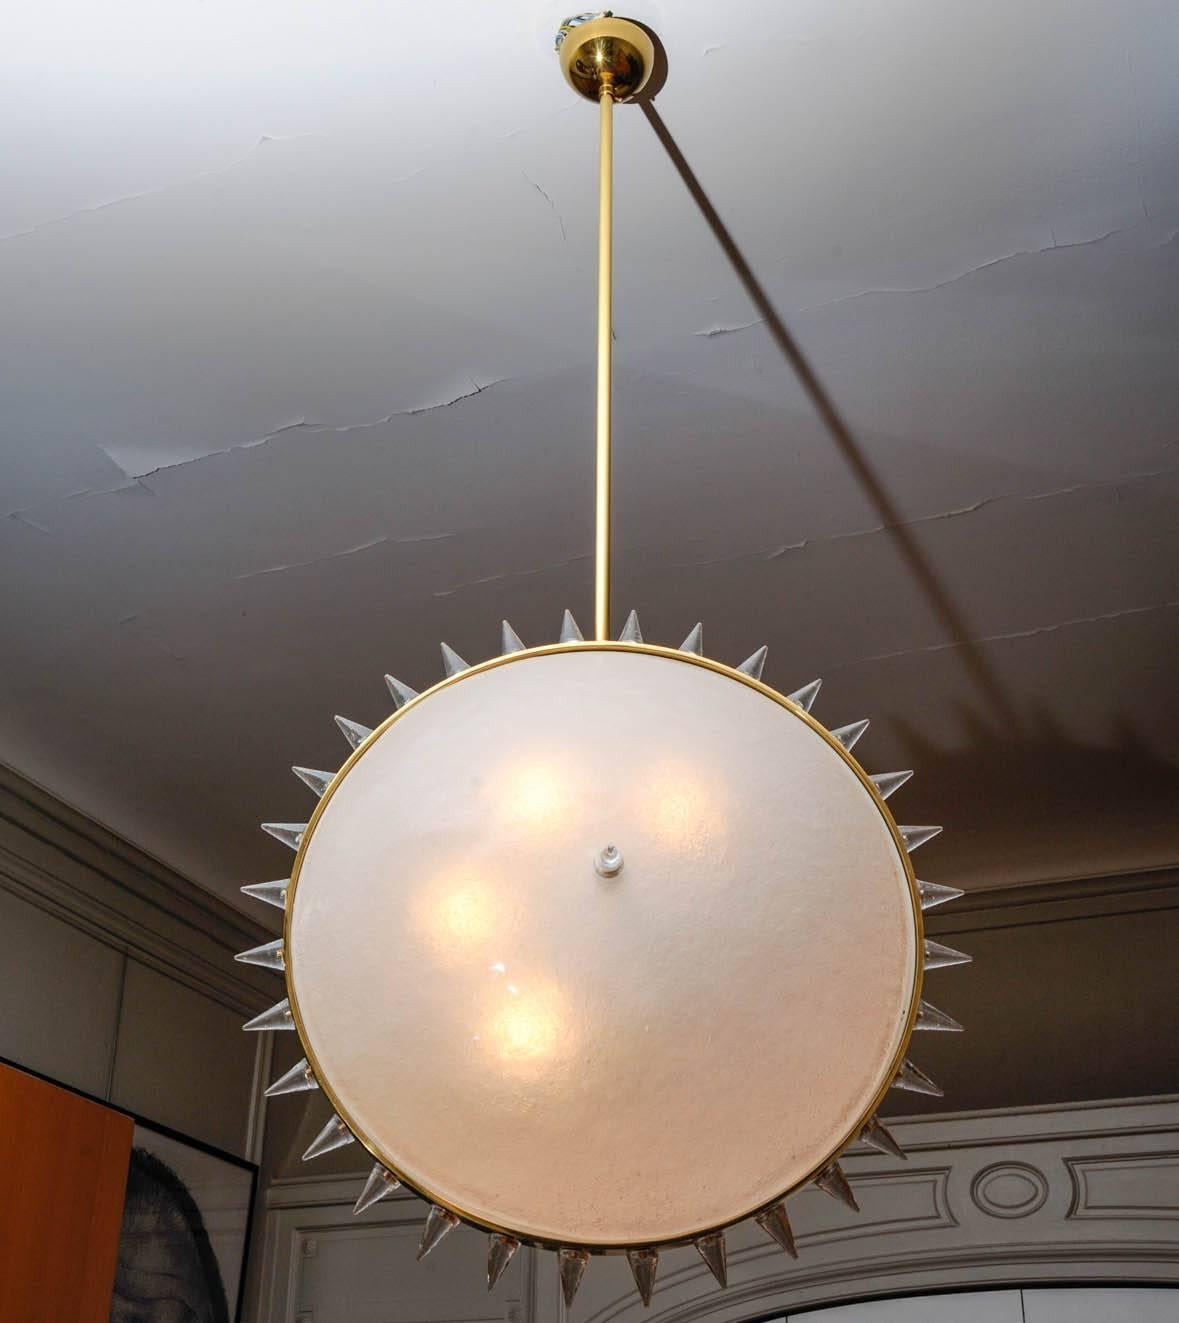 Murano glass chandelier
Designed by Luca fontana
.